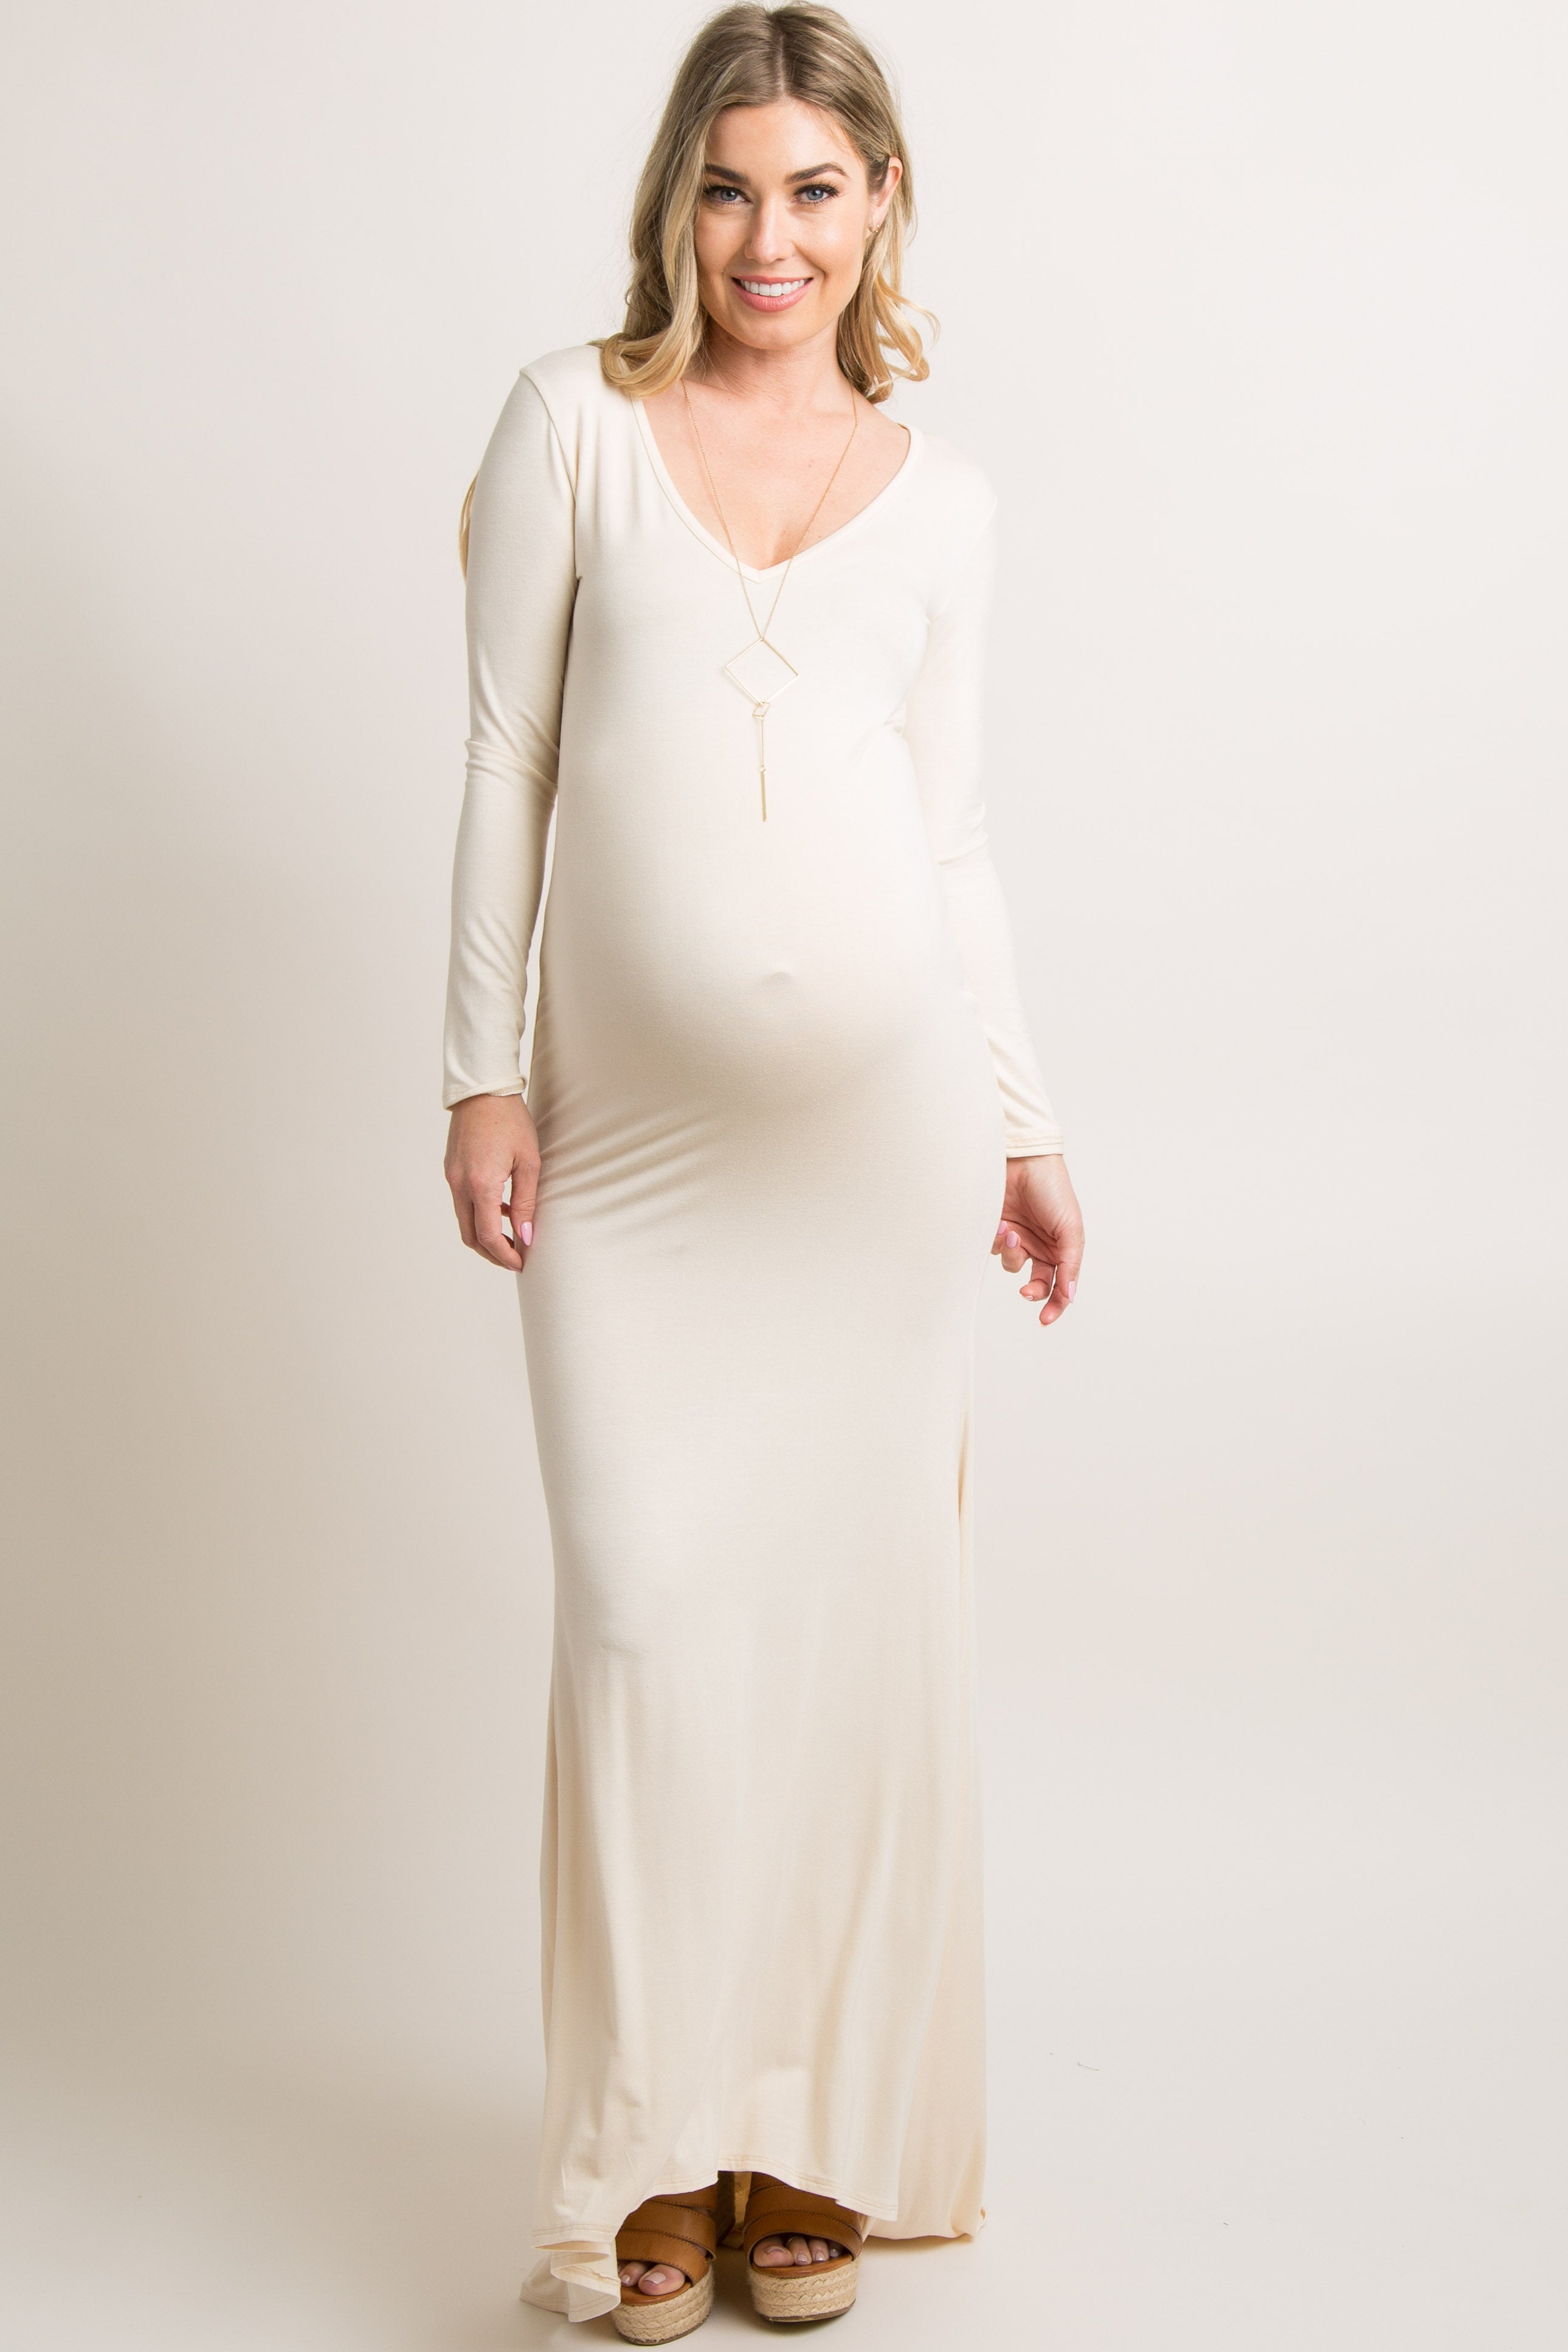 V Neck Lace Maternity Dresses Long Sleeve Boho Maternity Gowns